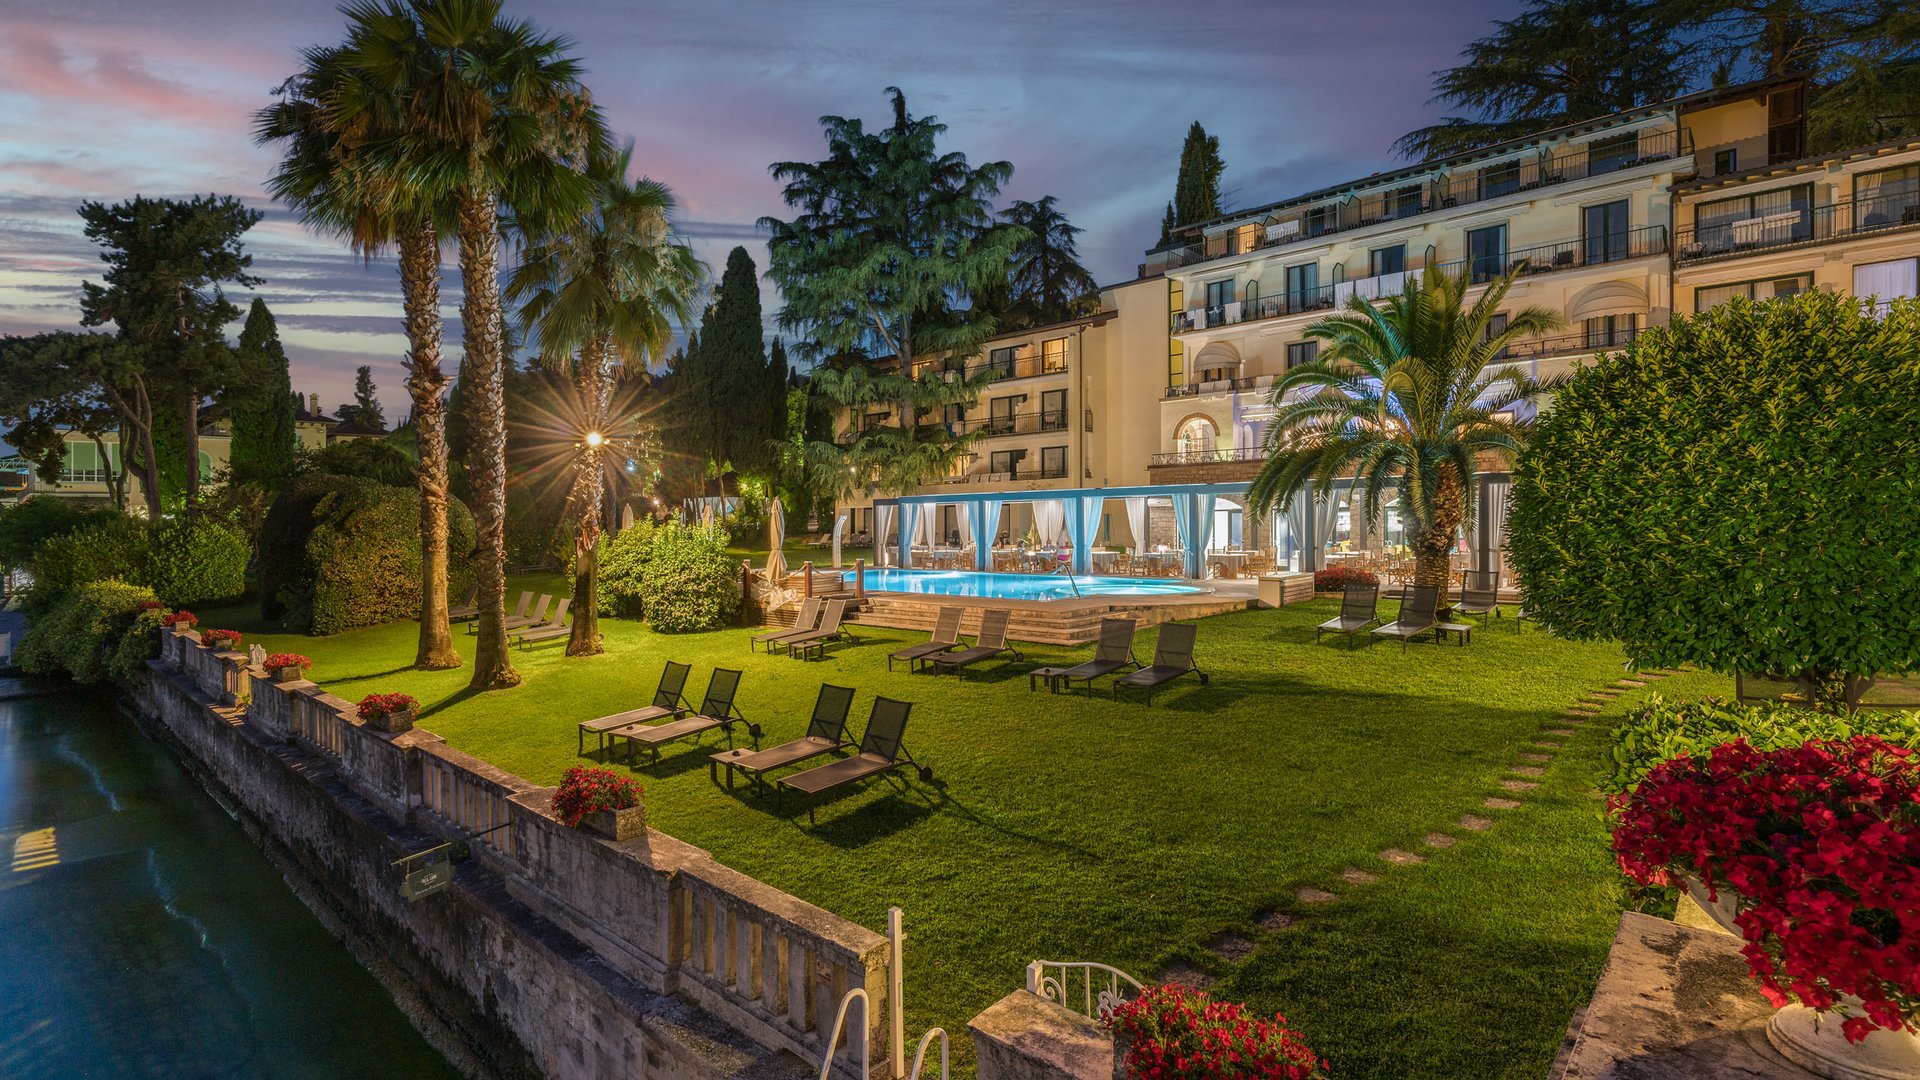 Charmantes Hotel am Gardasee mit Pool und Seeblick